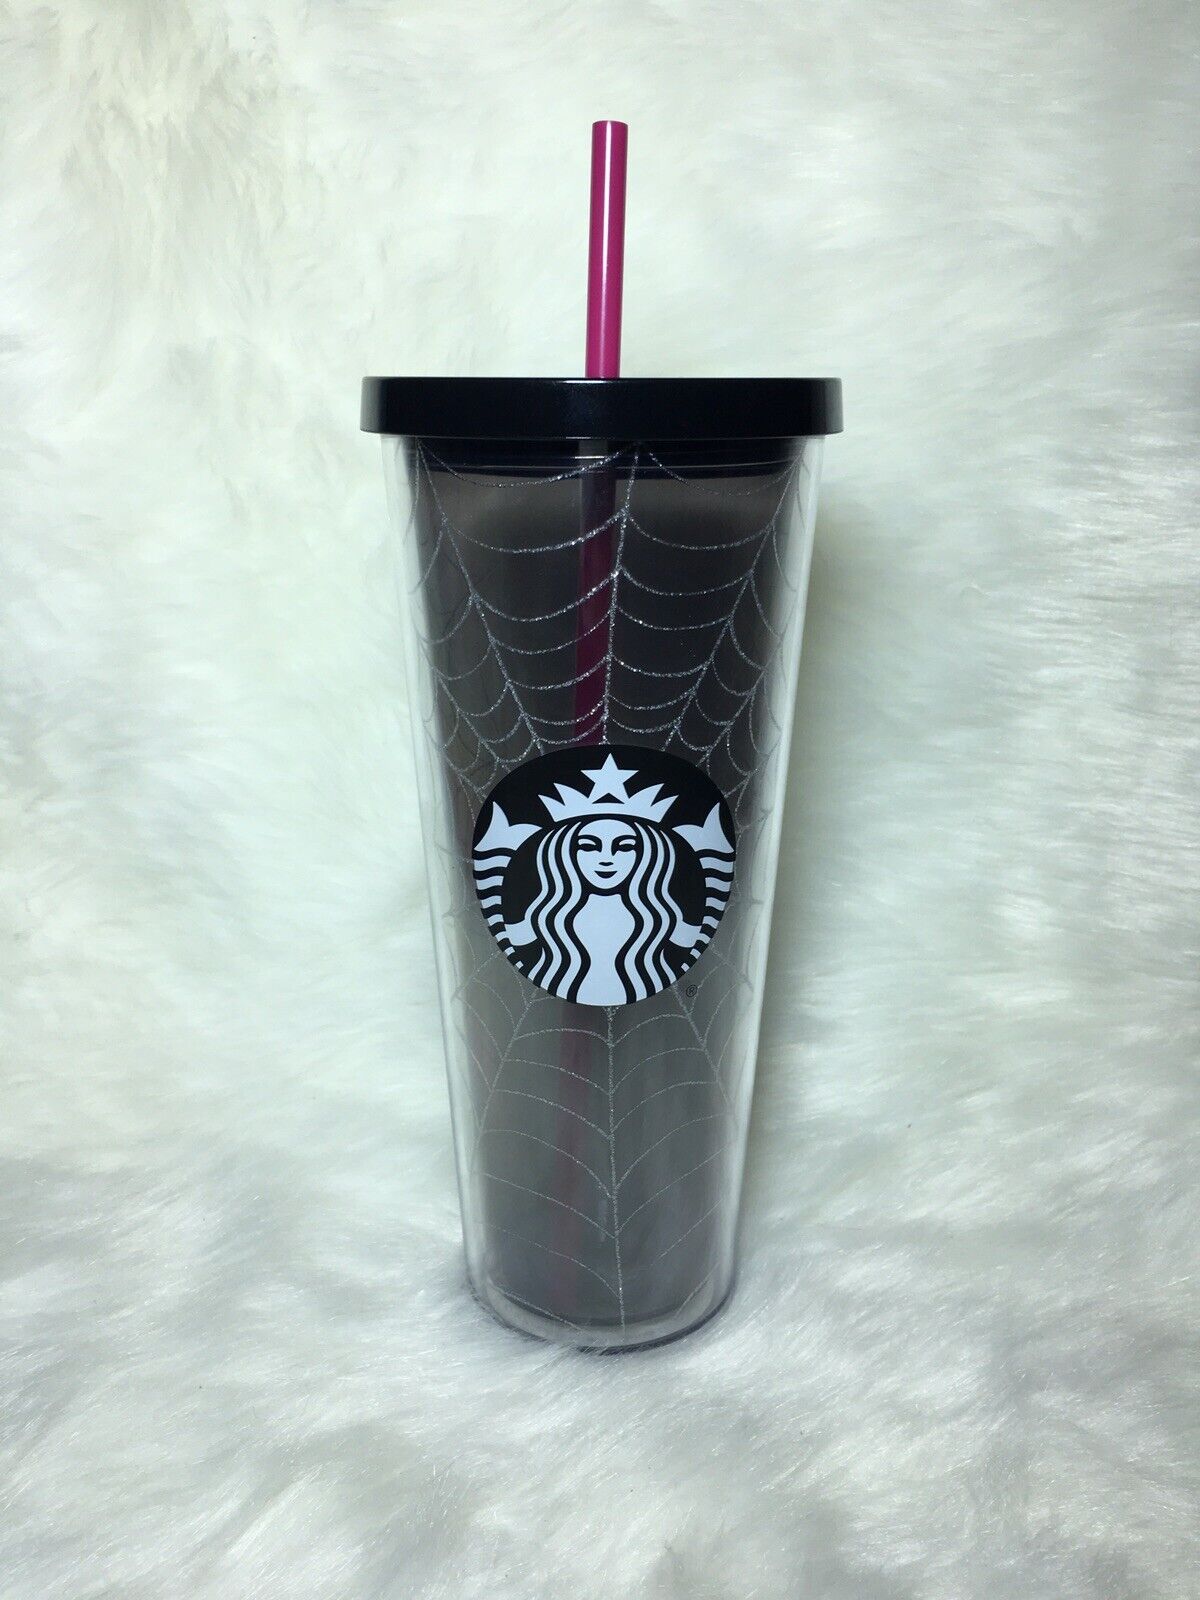 New Starbucks Glitter Spiderweb Tumbler Cup Limited Edition Halloween 2019 24 oz